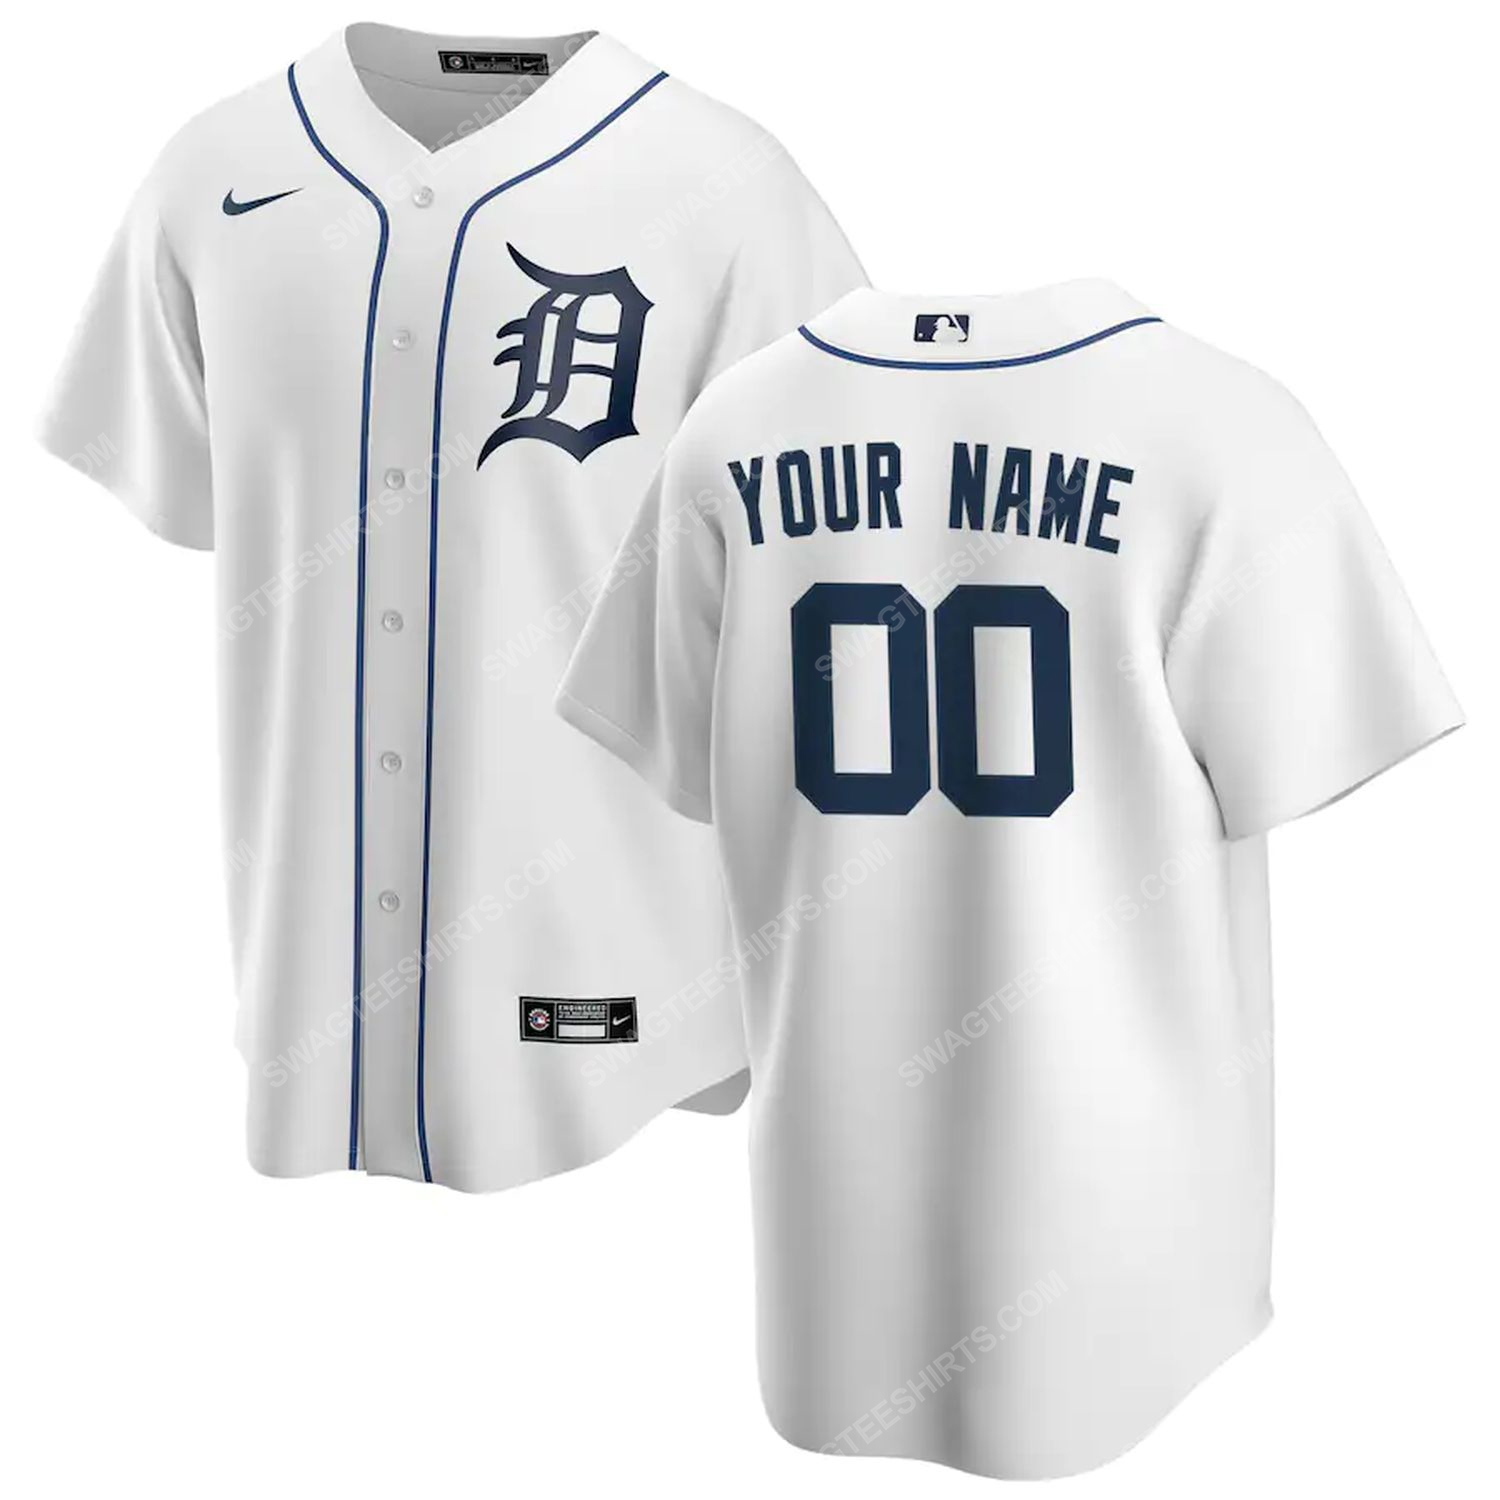 Personalized mlb detroit tigers team baseball jersey-white